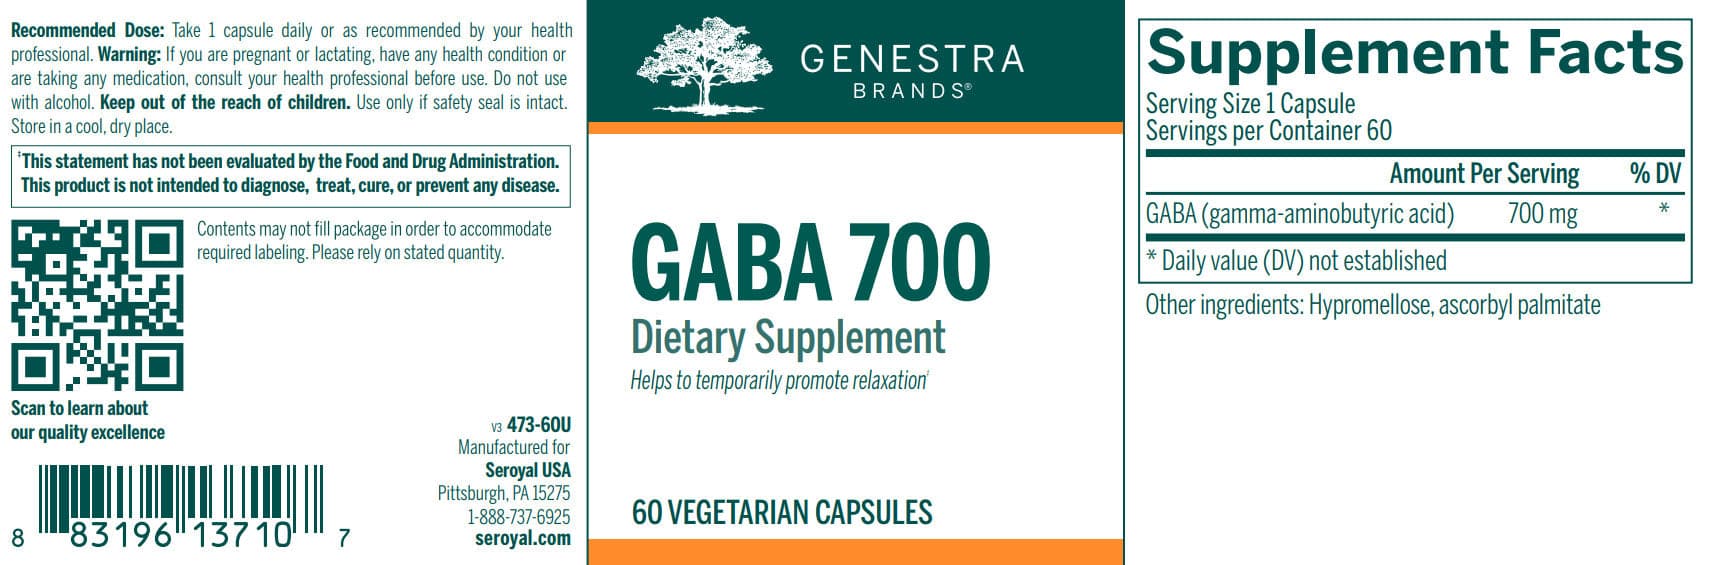 Genestra Brands GABA 700 Label